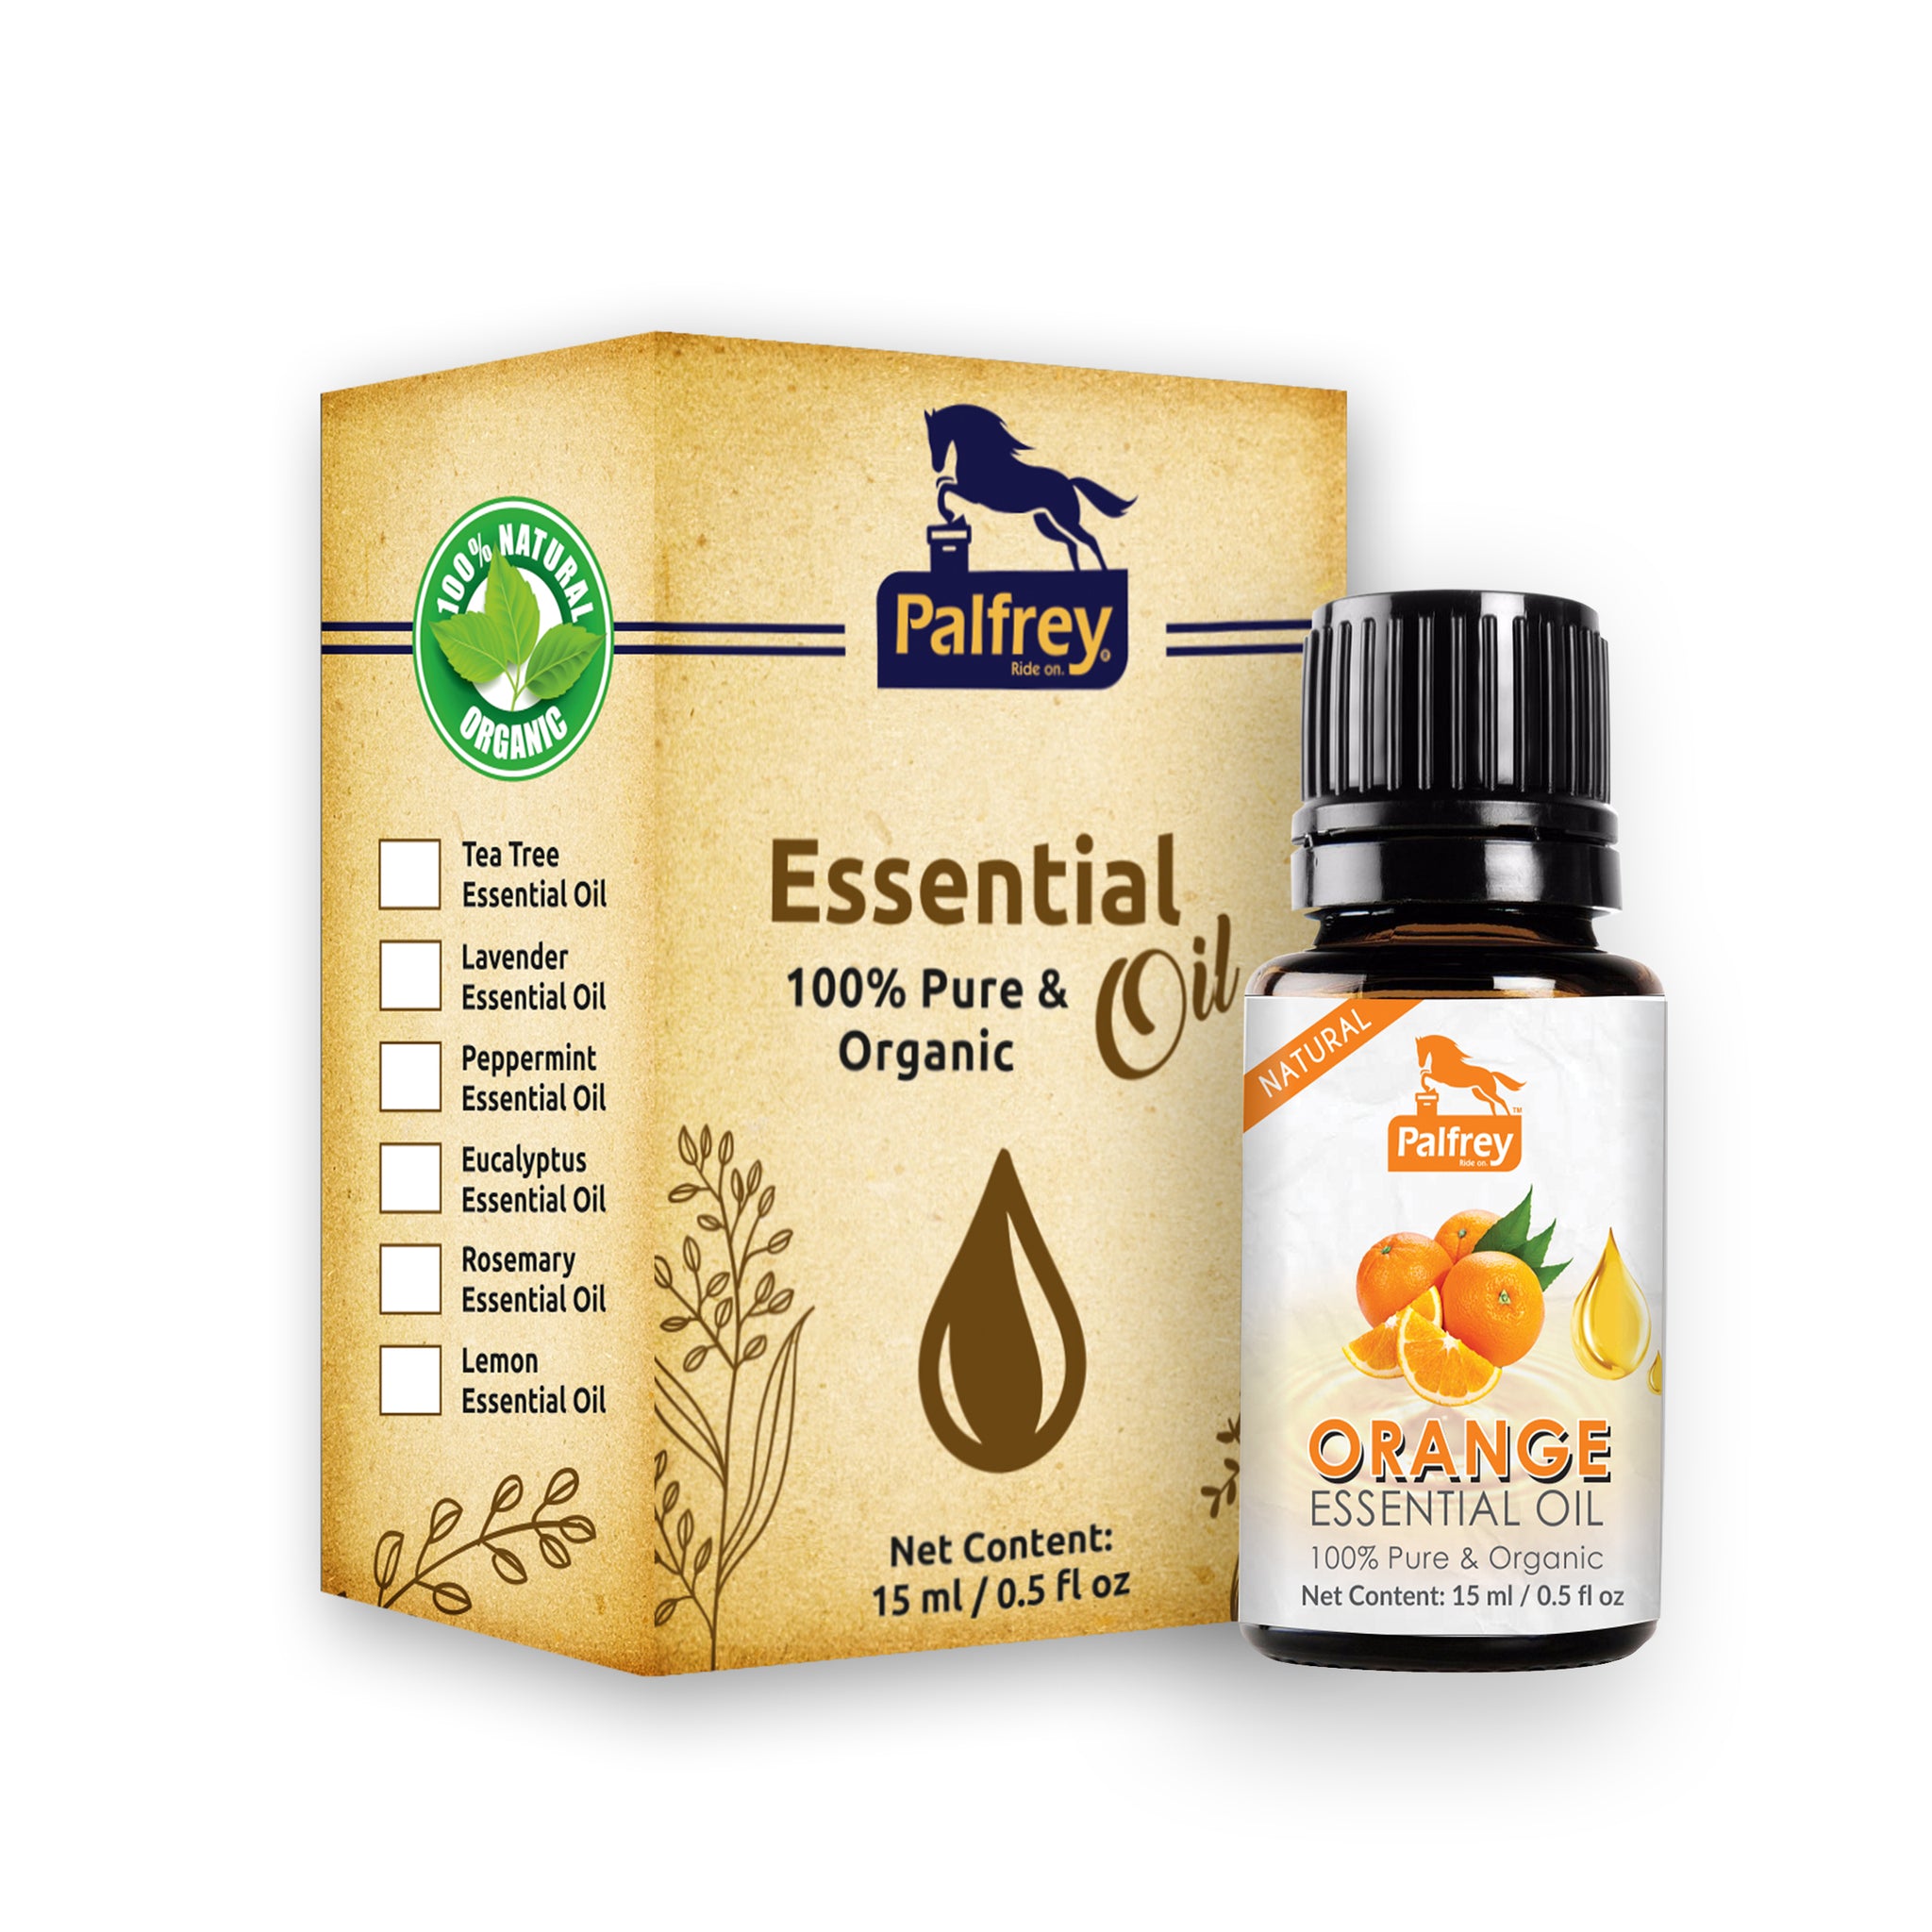 Palfrey Orange Essential Oil 15ml